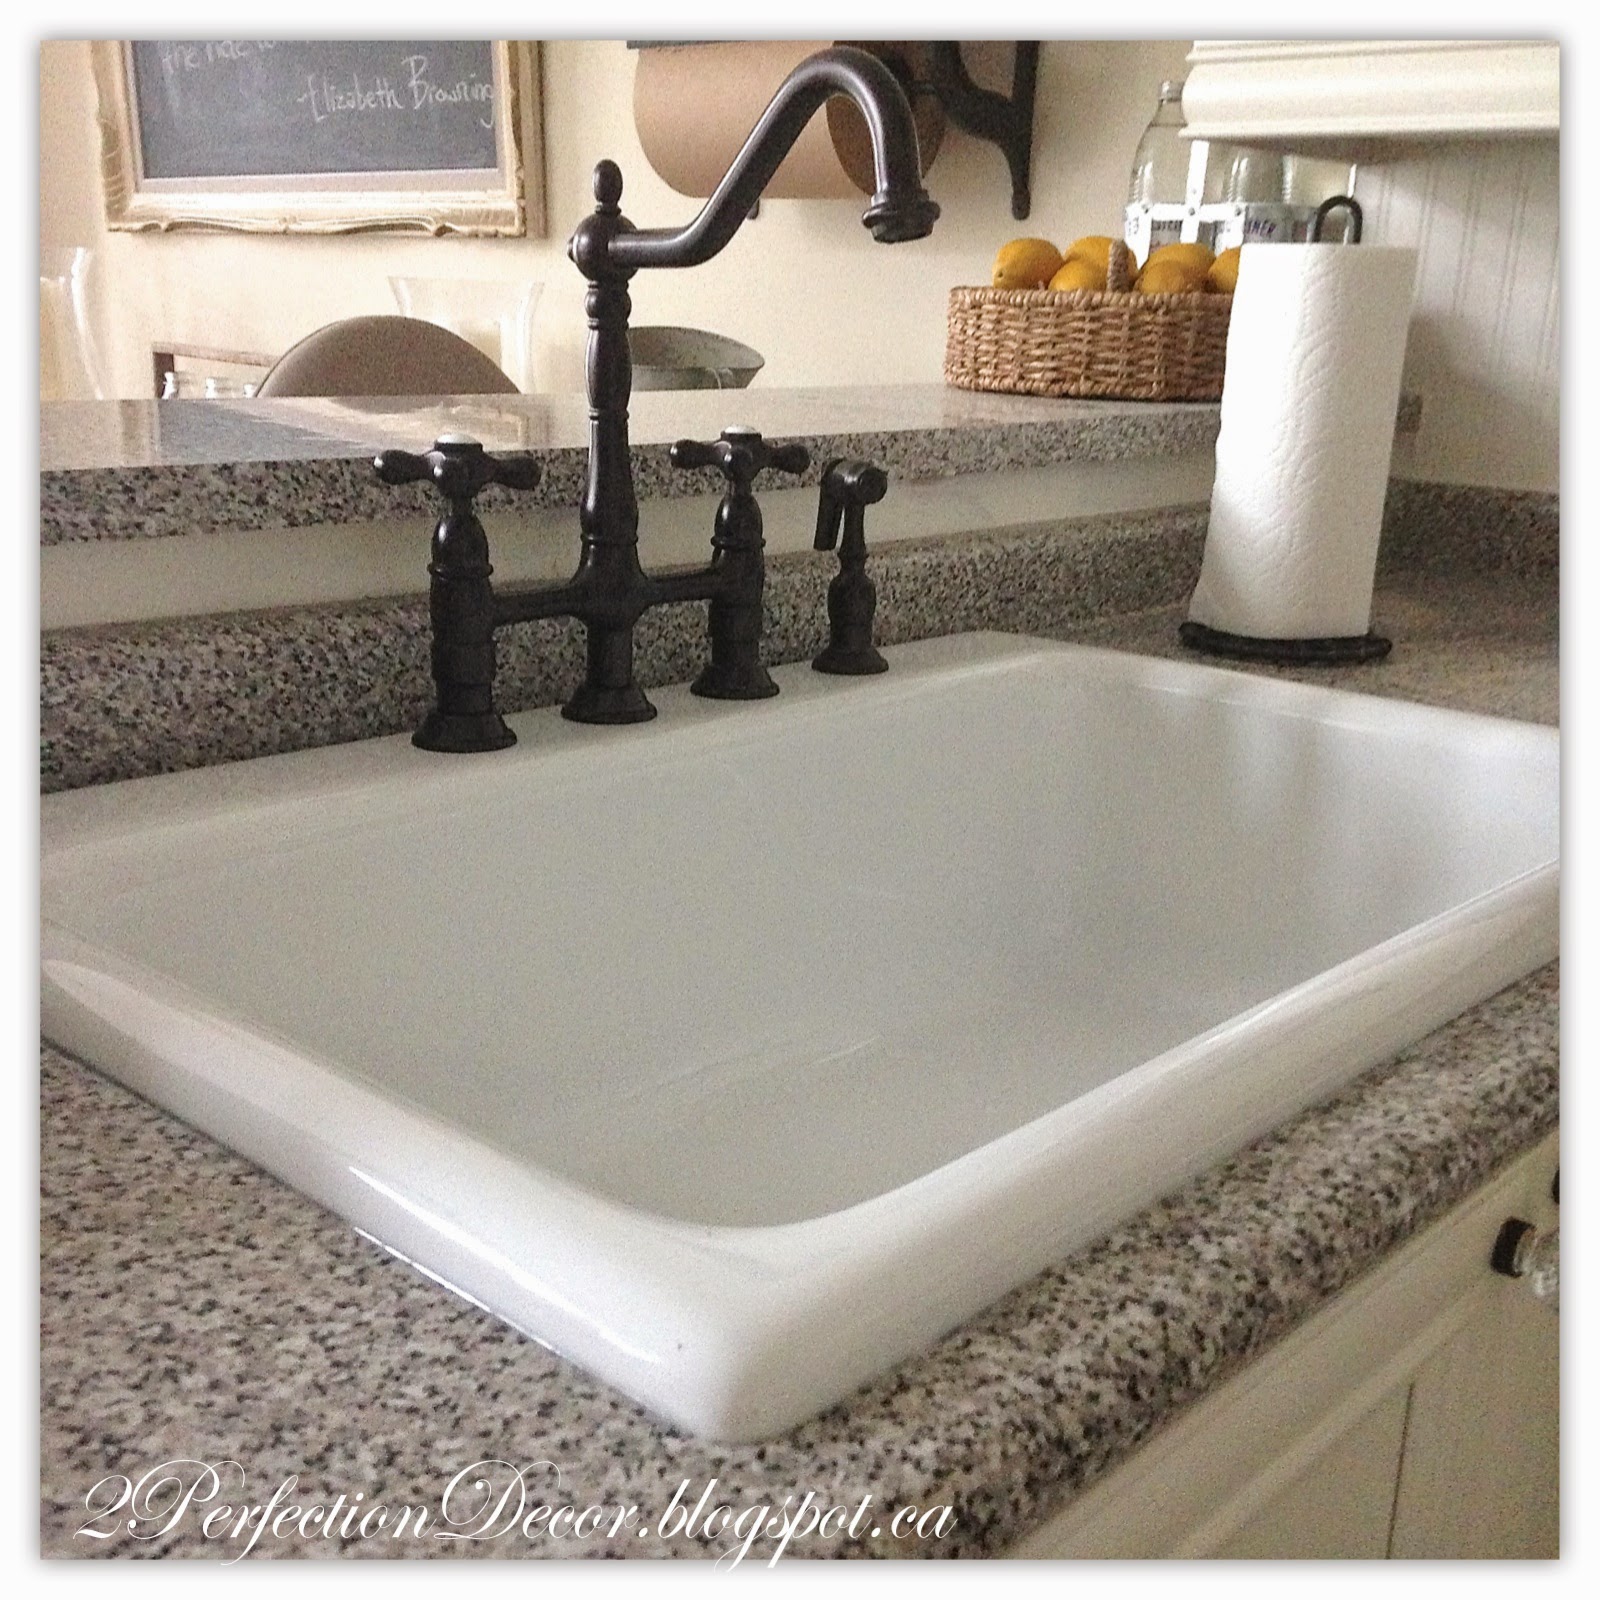 2Perfection Decor: New Farmhouse Kitchen Sink & Faucet